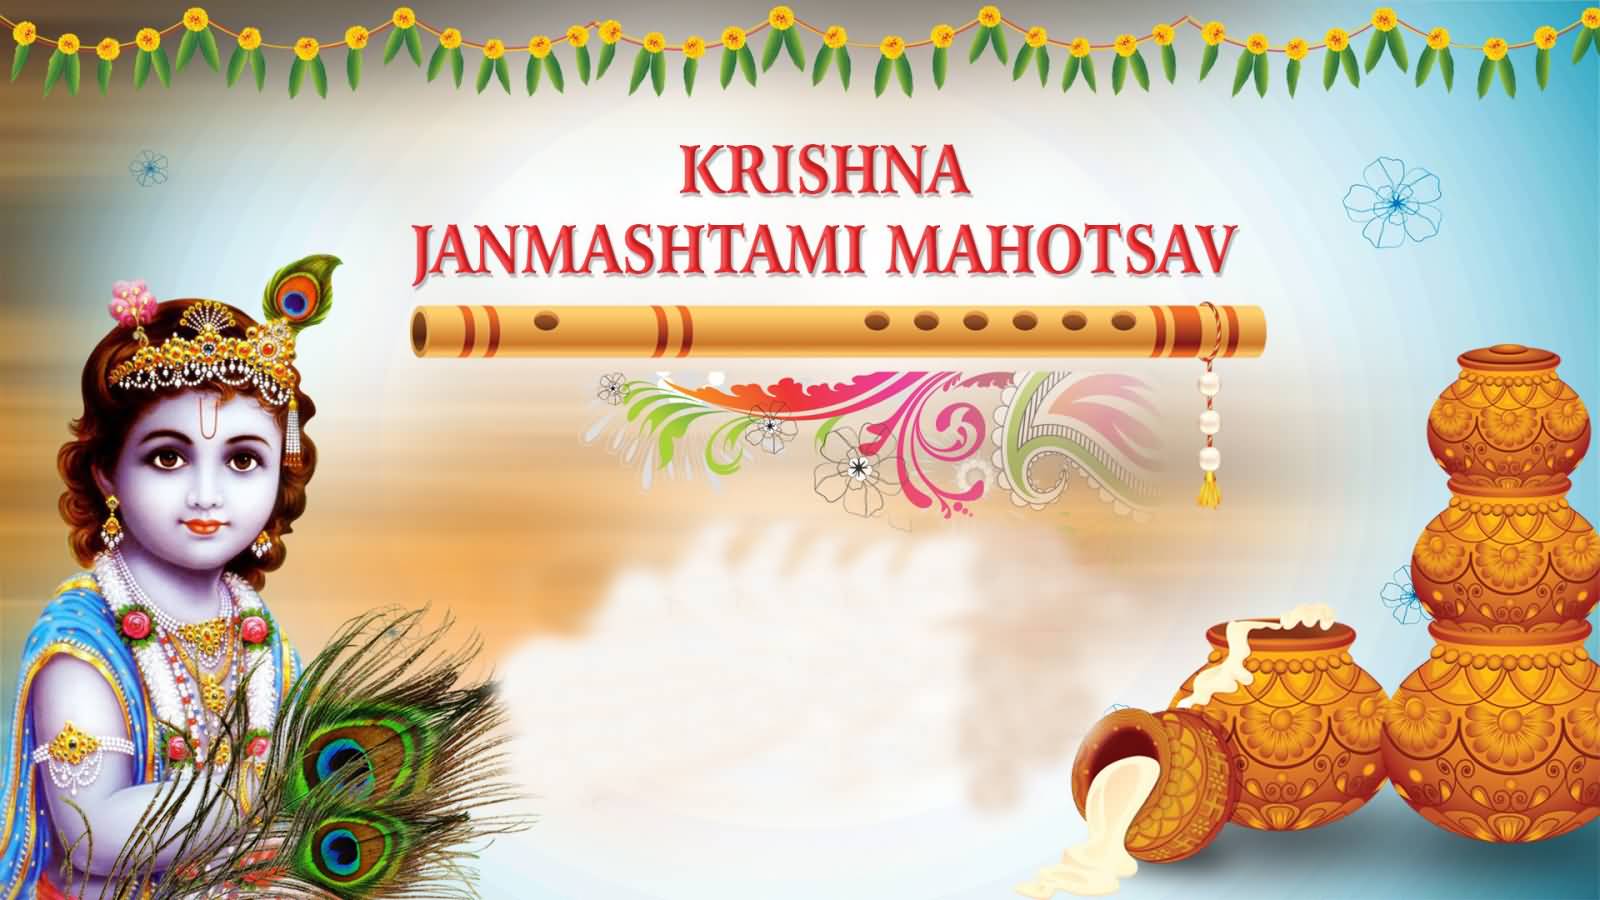 Krishna Janamashtami Mahotsav